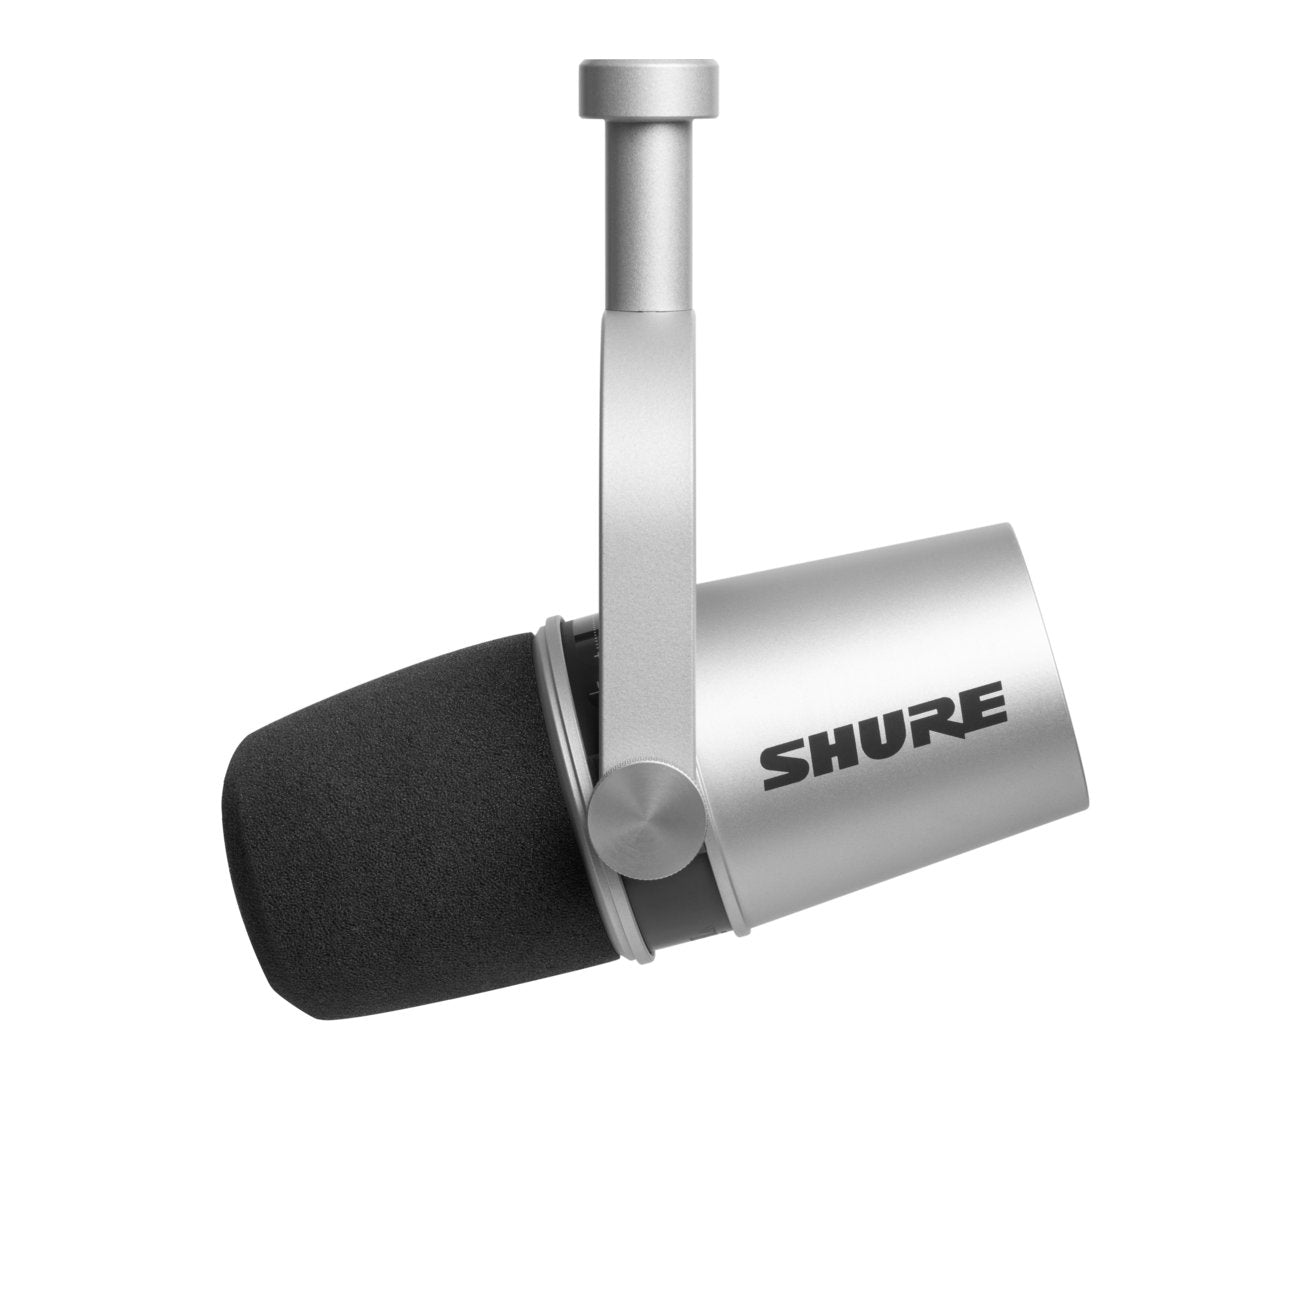 Shure MV7 Podcast Microphone, Silver